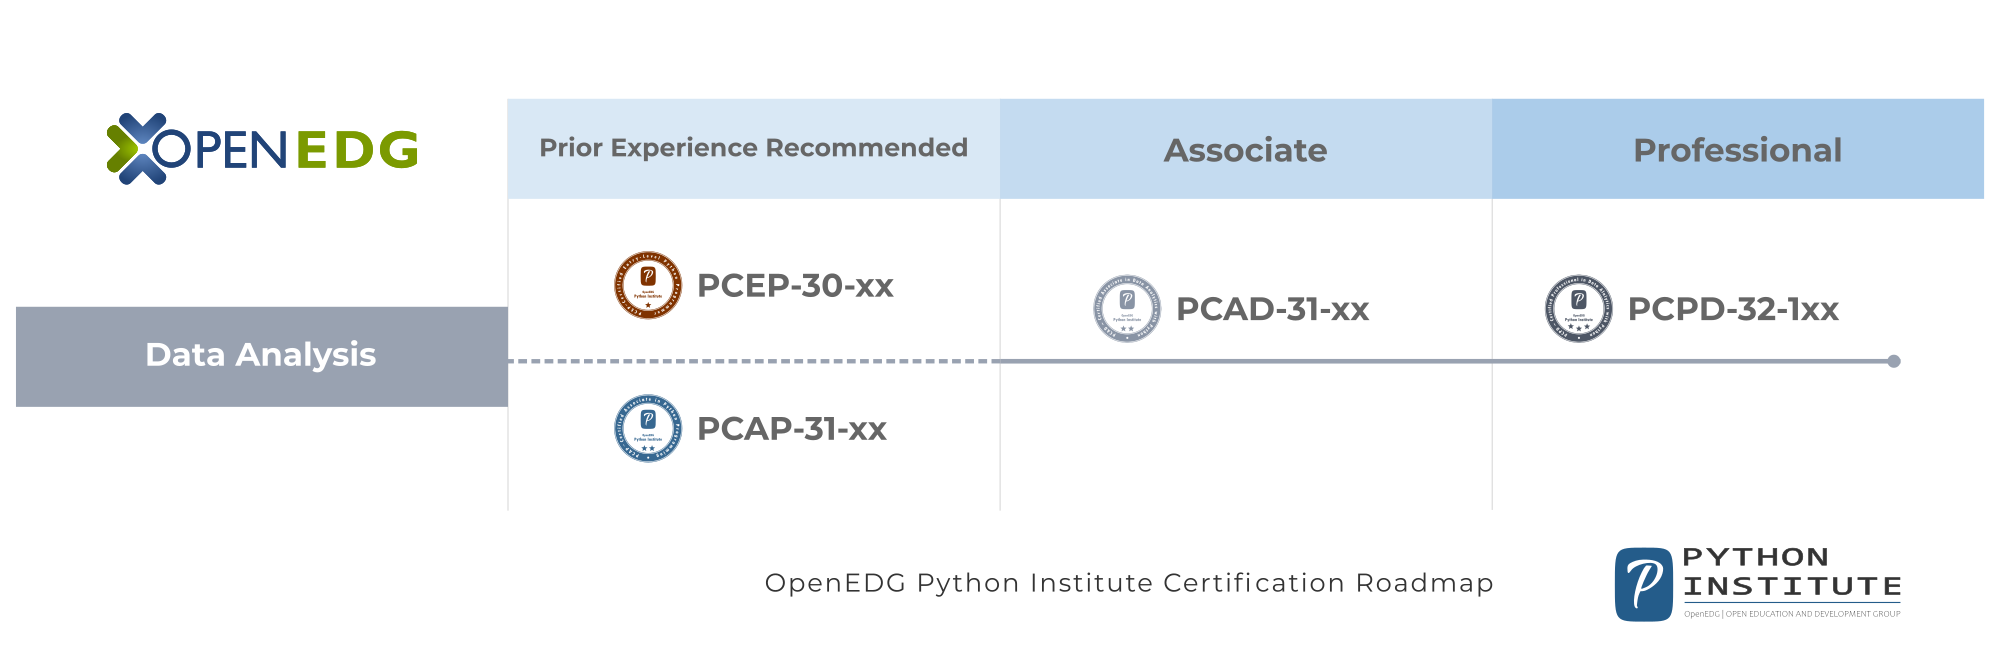 OpenEDG Python Institute Certification Roadmap